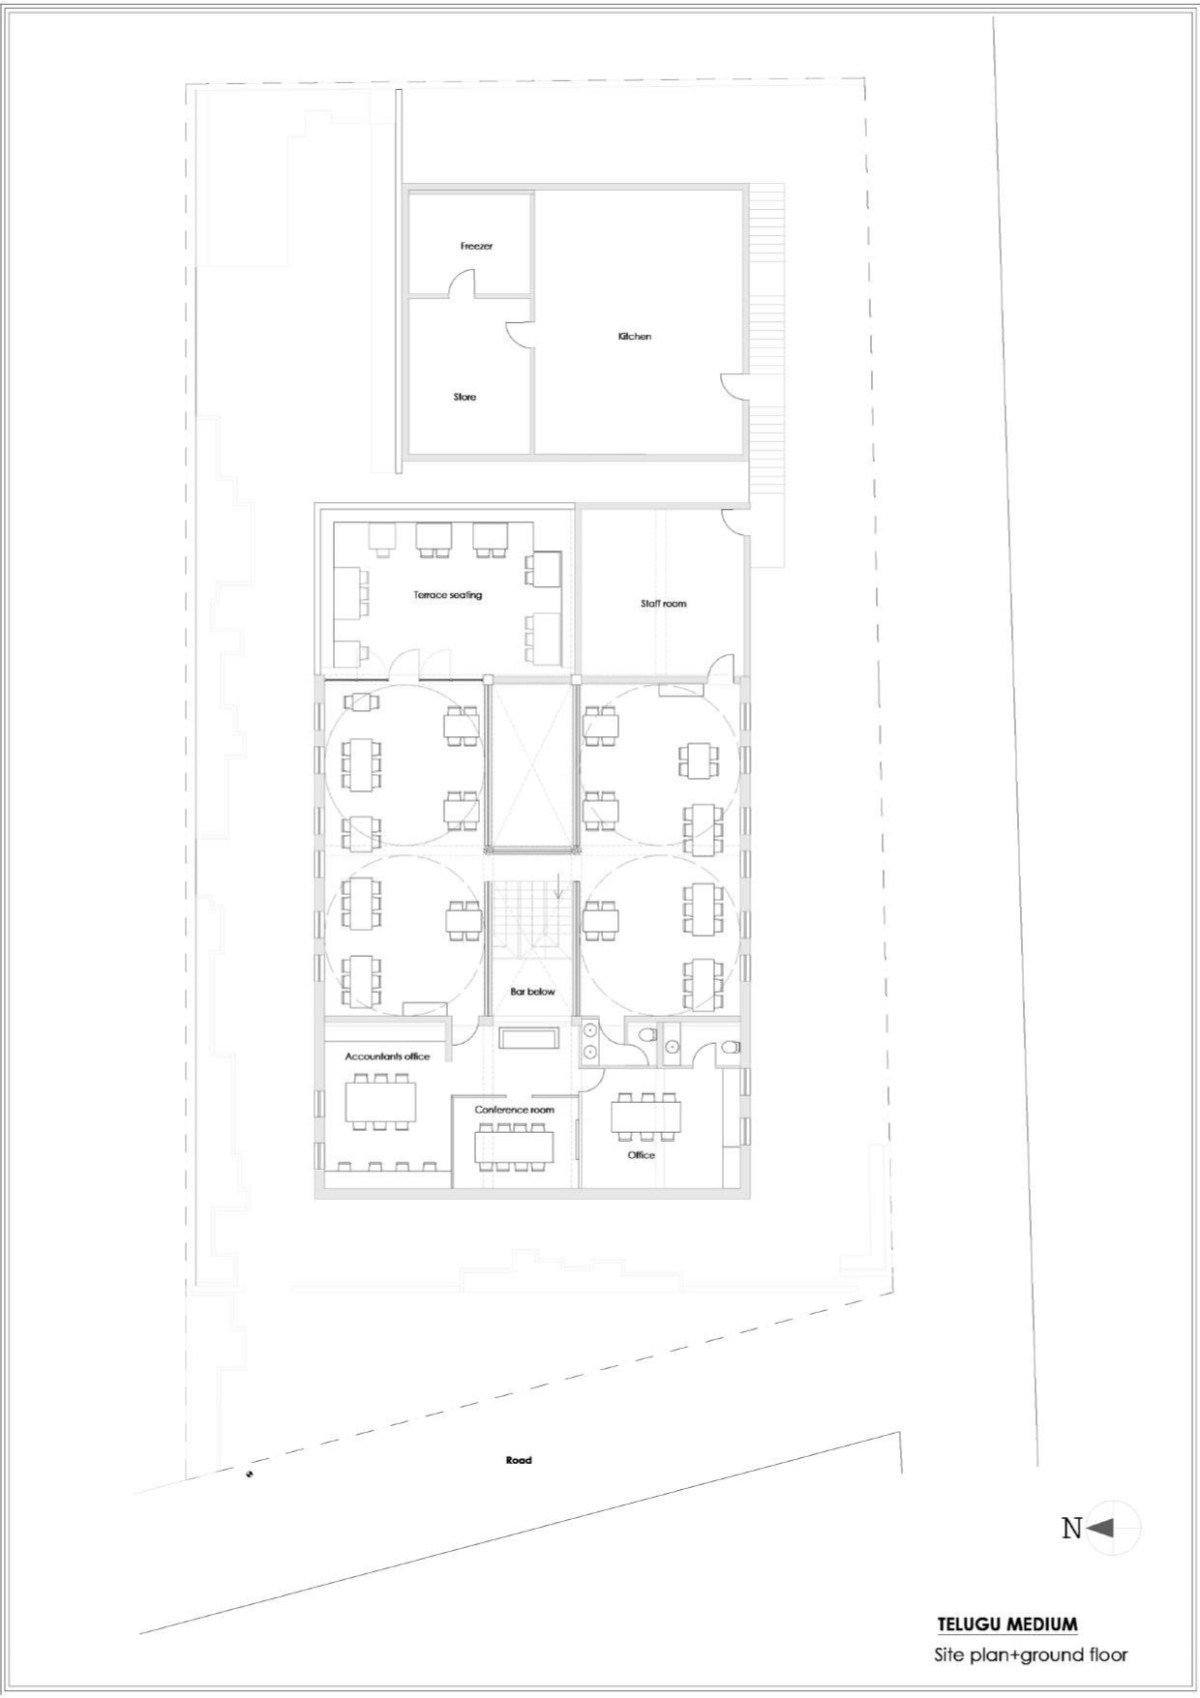 First Floor Plan of Telugu Medium by Sona Reddy Studio